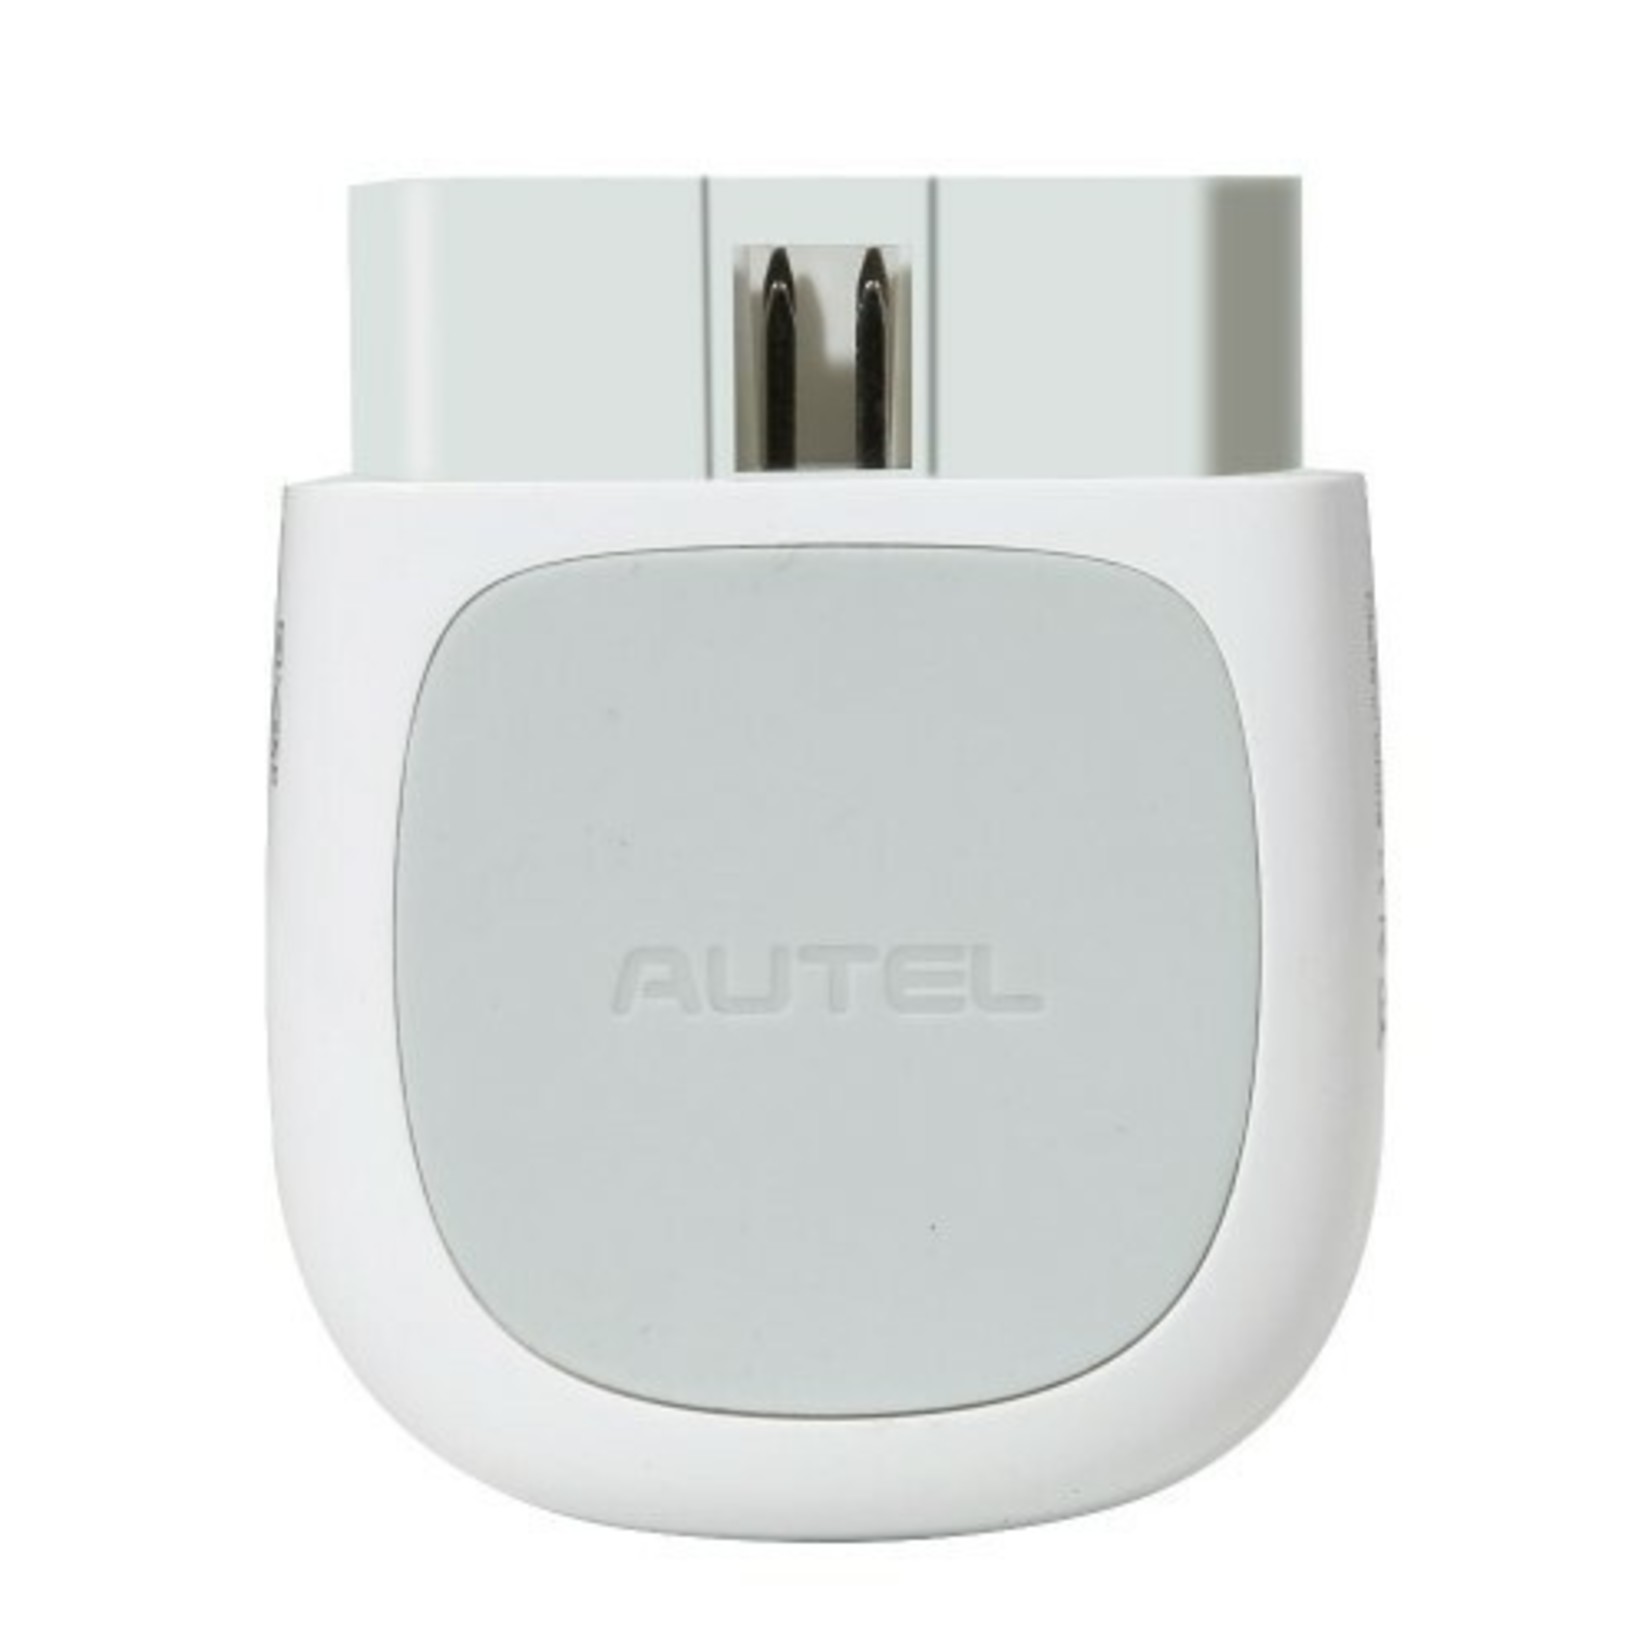 Autel Autel AP200 Bluetooth OBD2 Scanner Code Reader met Volledige Systeem Diagnoses, AutoVIN, Olie/EPB/BMS/SAS/TPMS/DPF Reset IMMO Service voor Familie DIY gebruikers